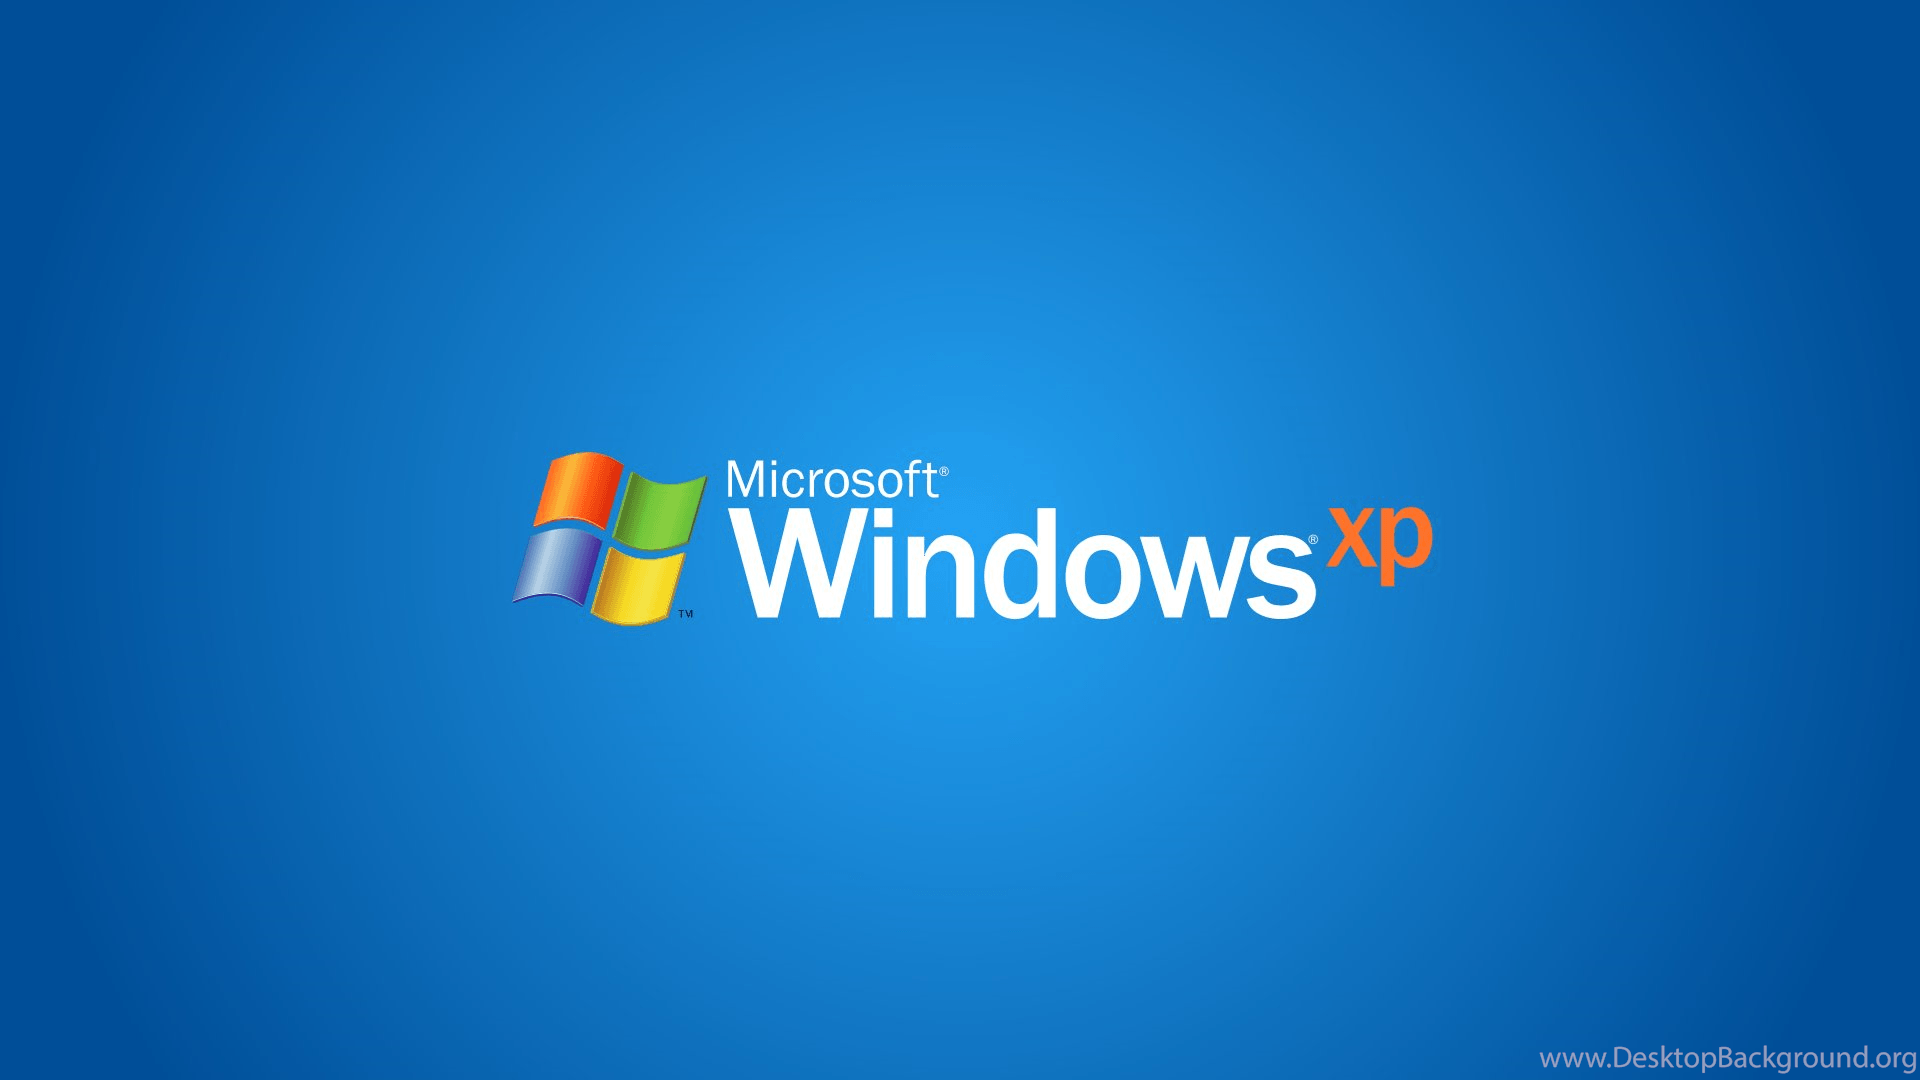 Cool Windows XP Wallpaper In HD For Free Download Desktop Background